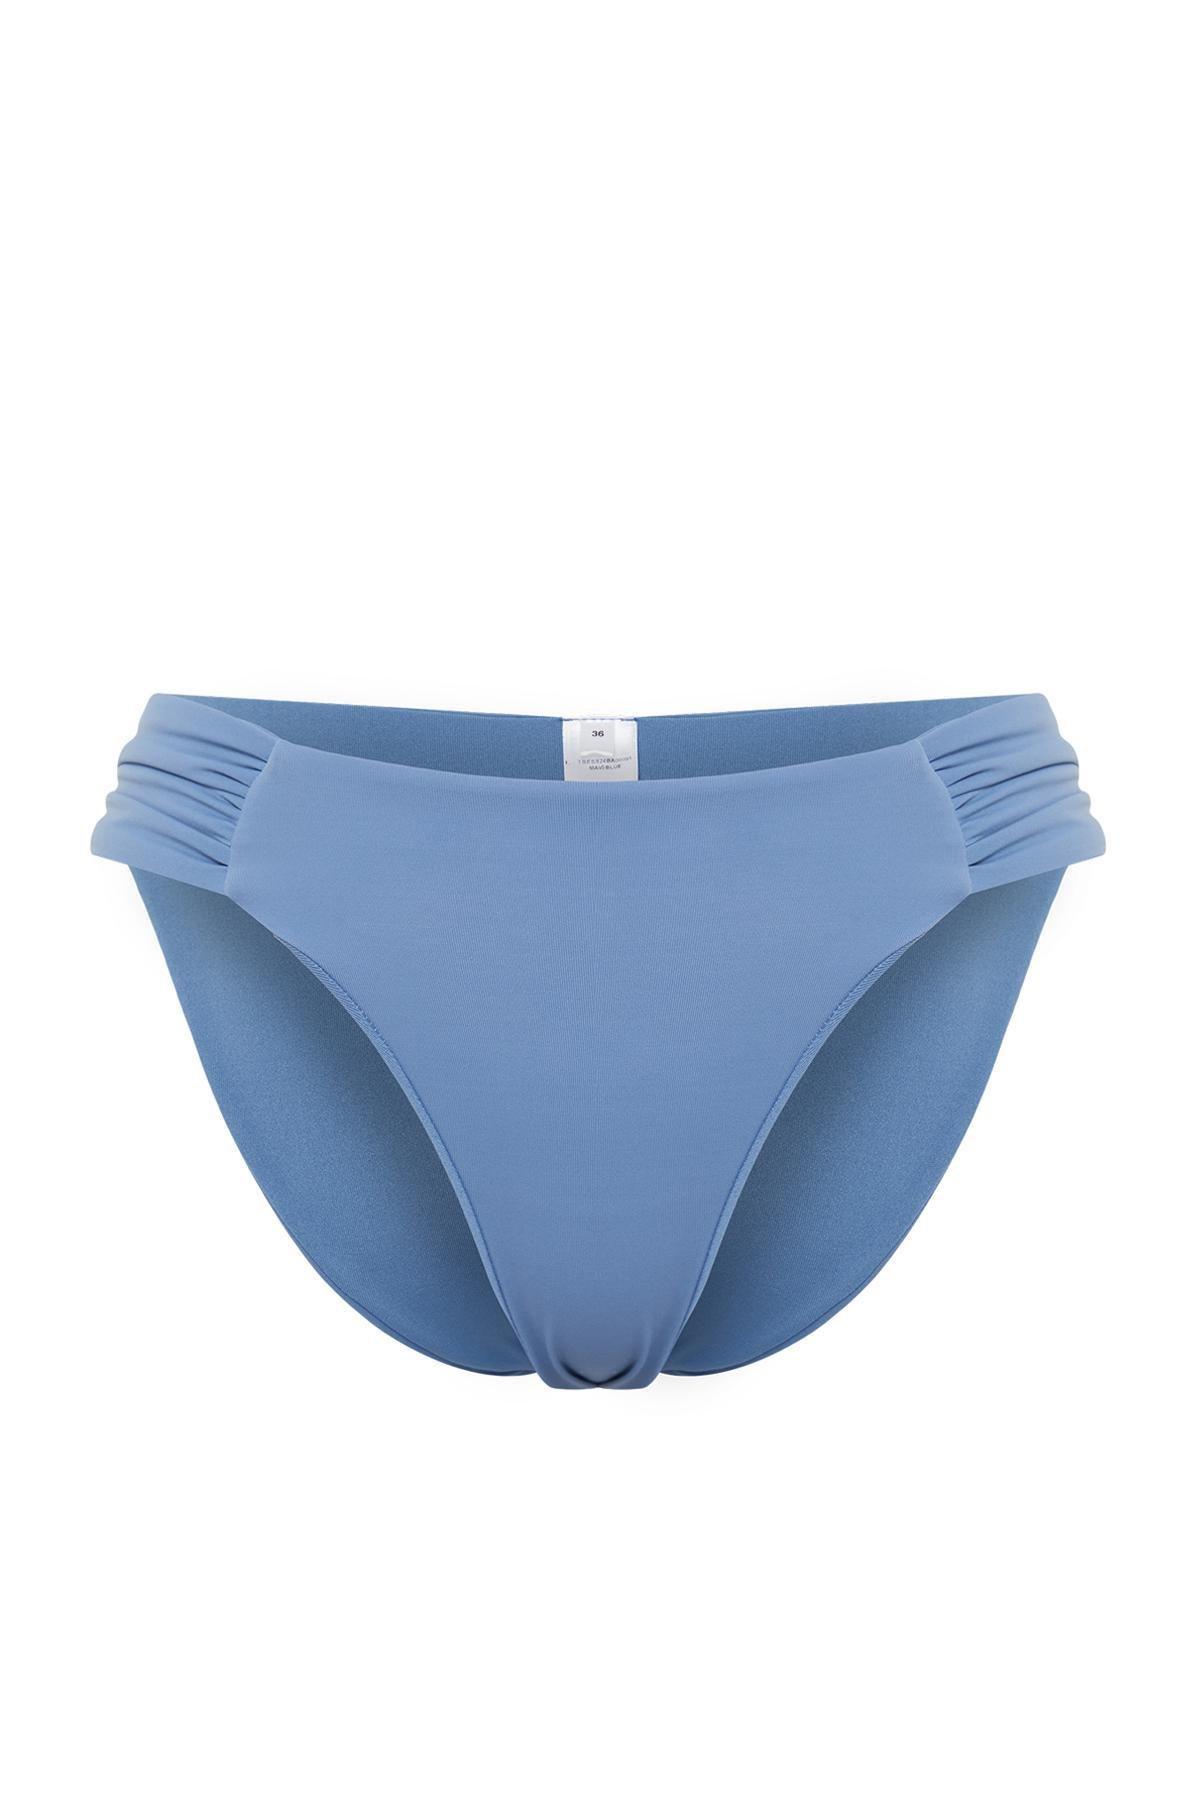 Trendyol - Blue Gathered Brazilian Bikini Bottom